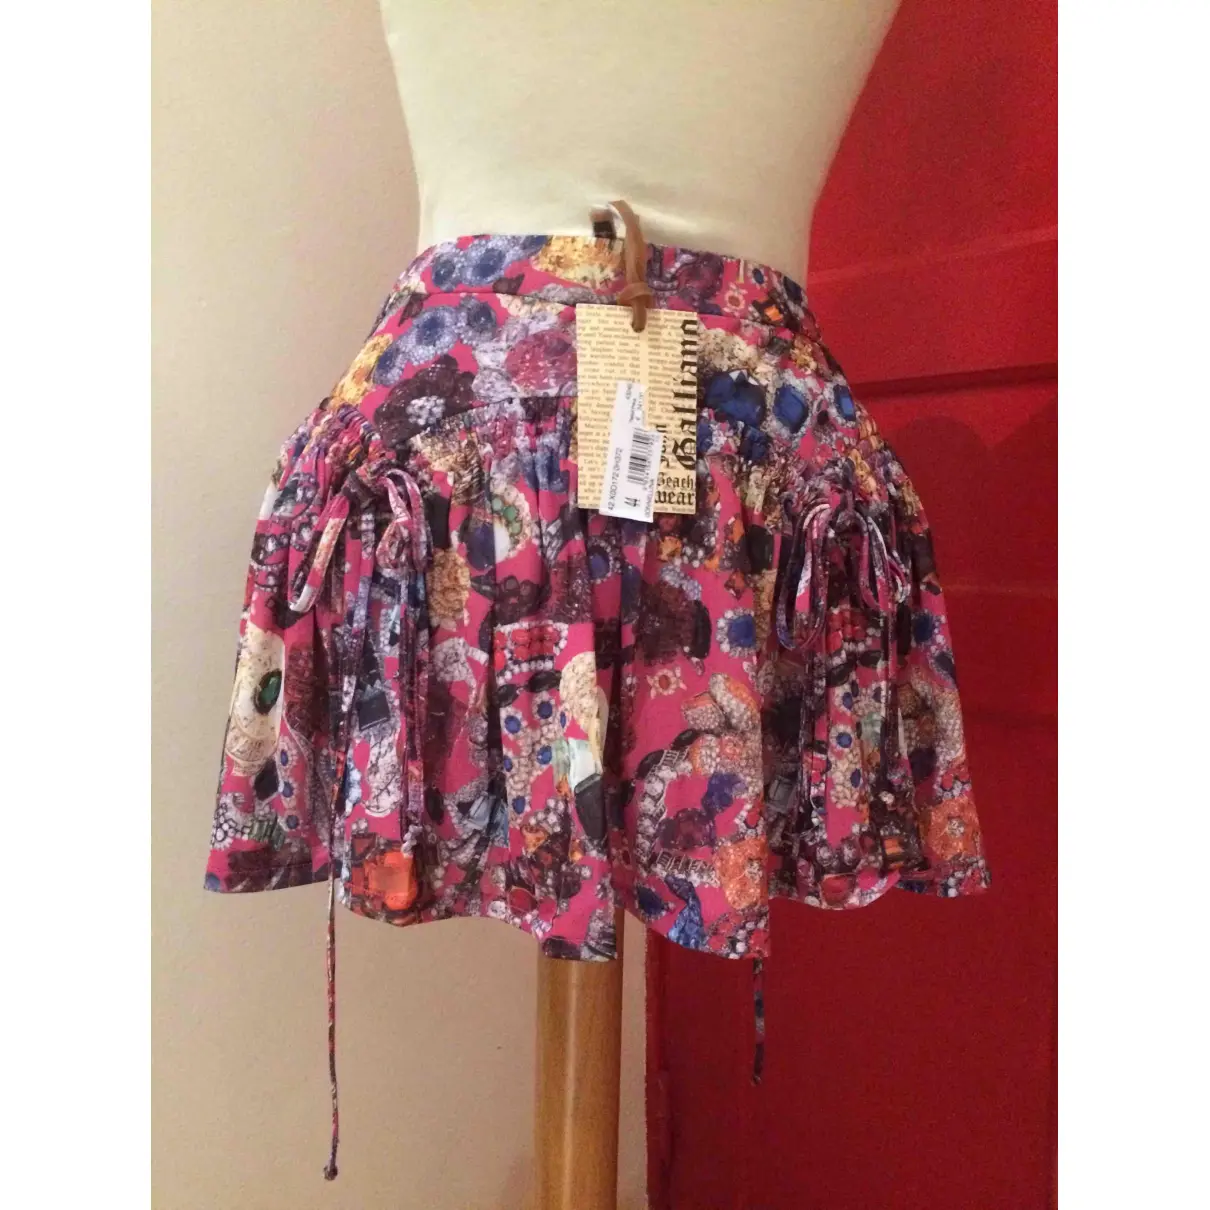 Buy John Galliano Mini skirt online